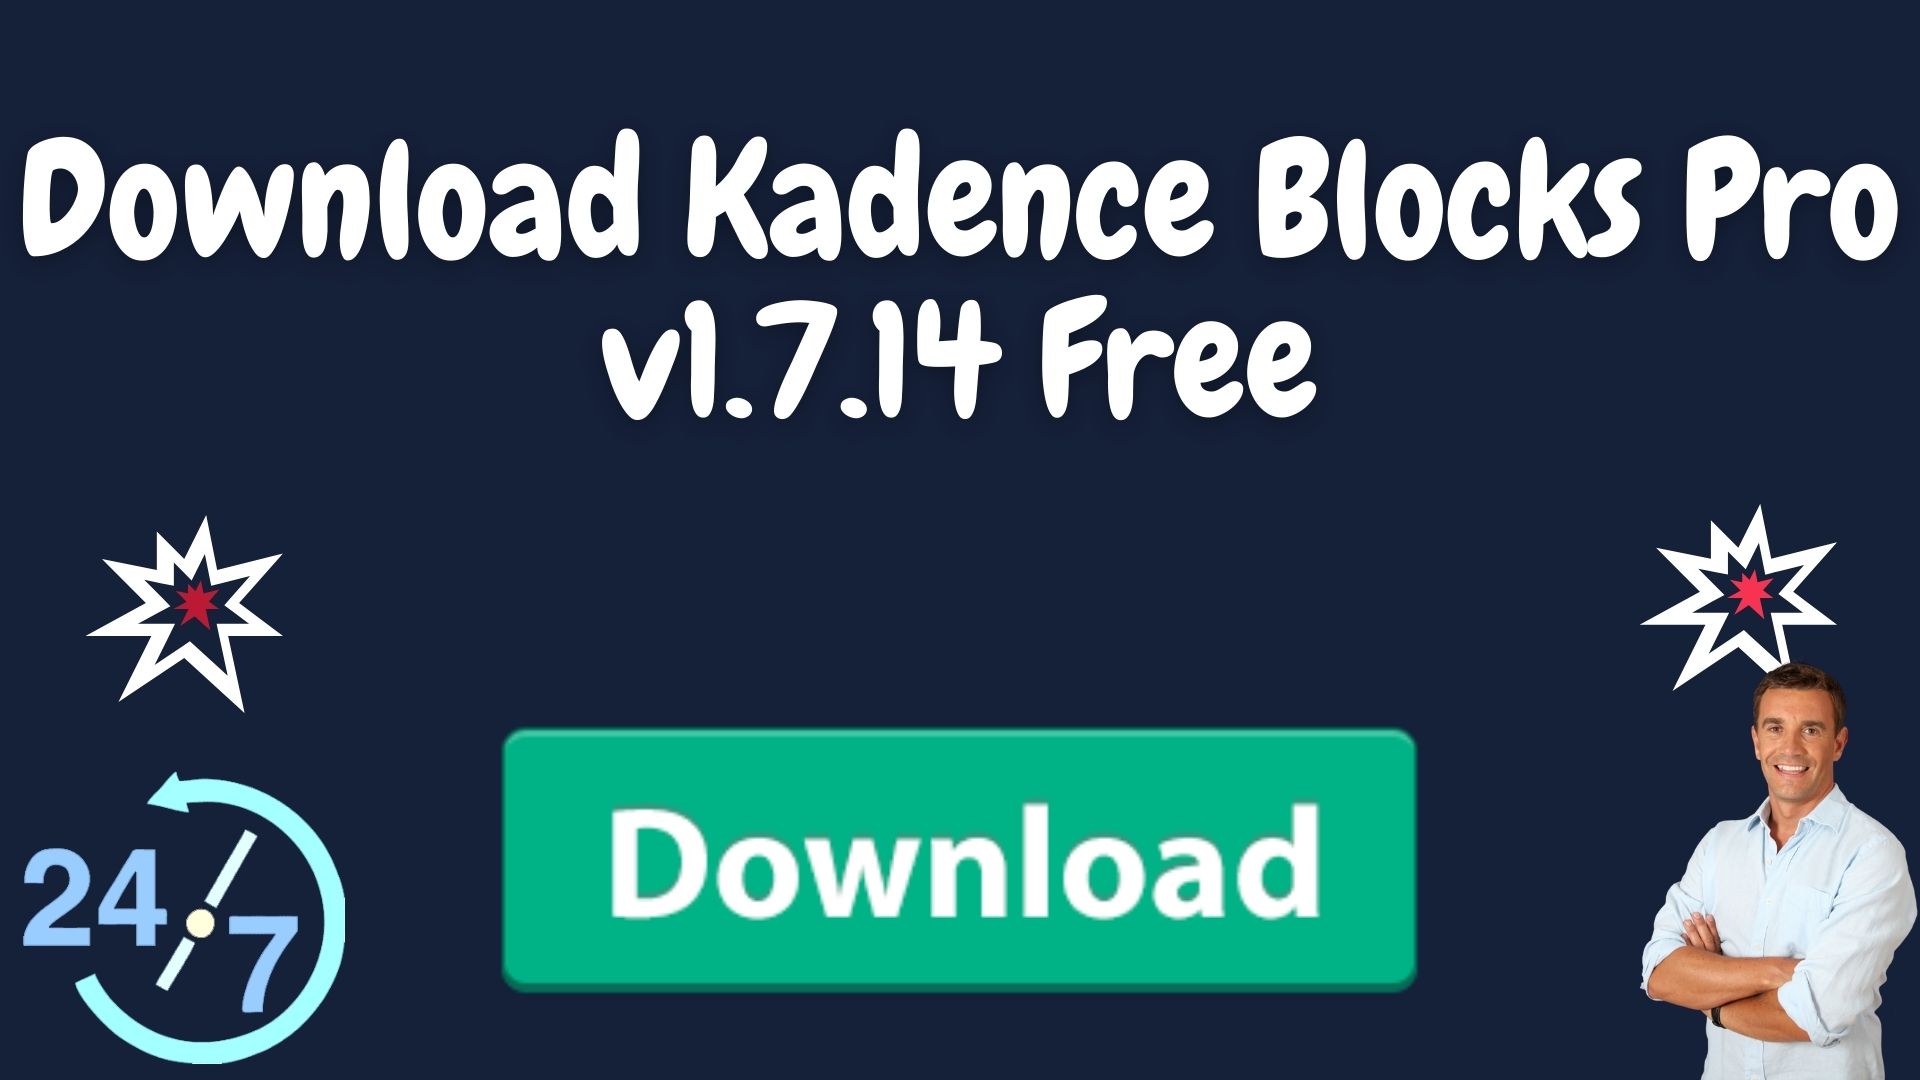 Download kadence blocks pro v1. 7. 14 free